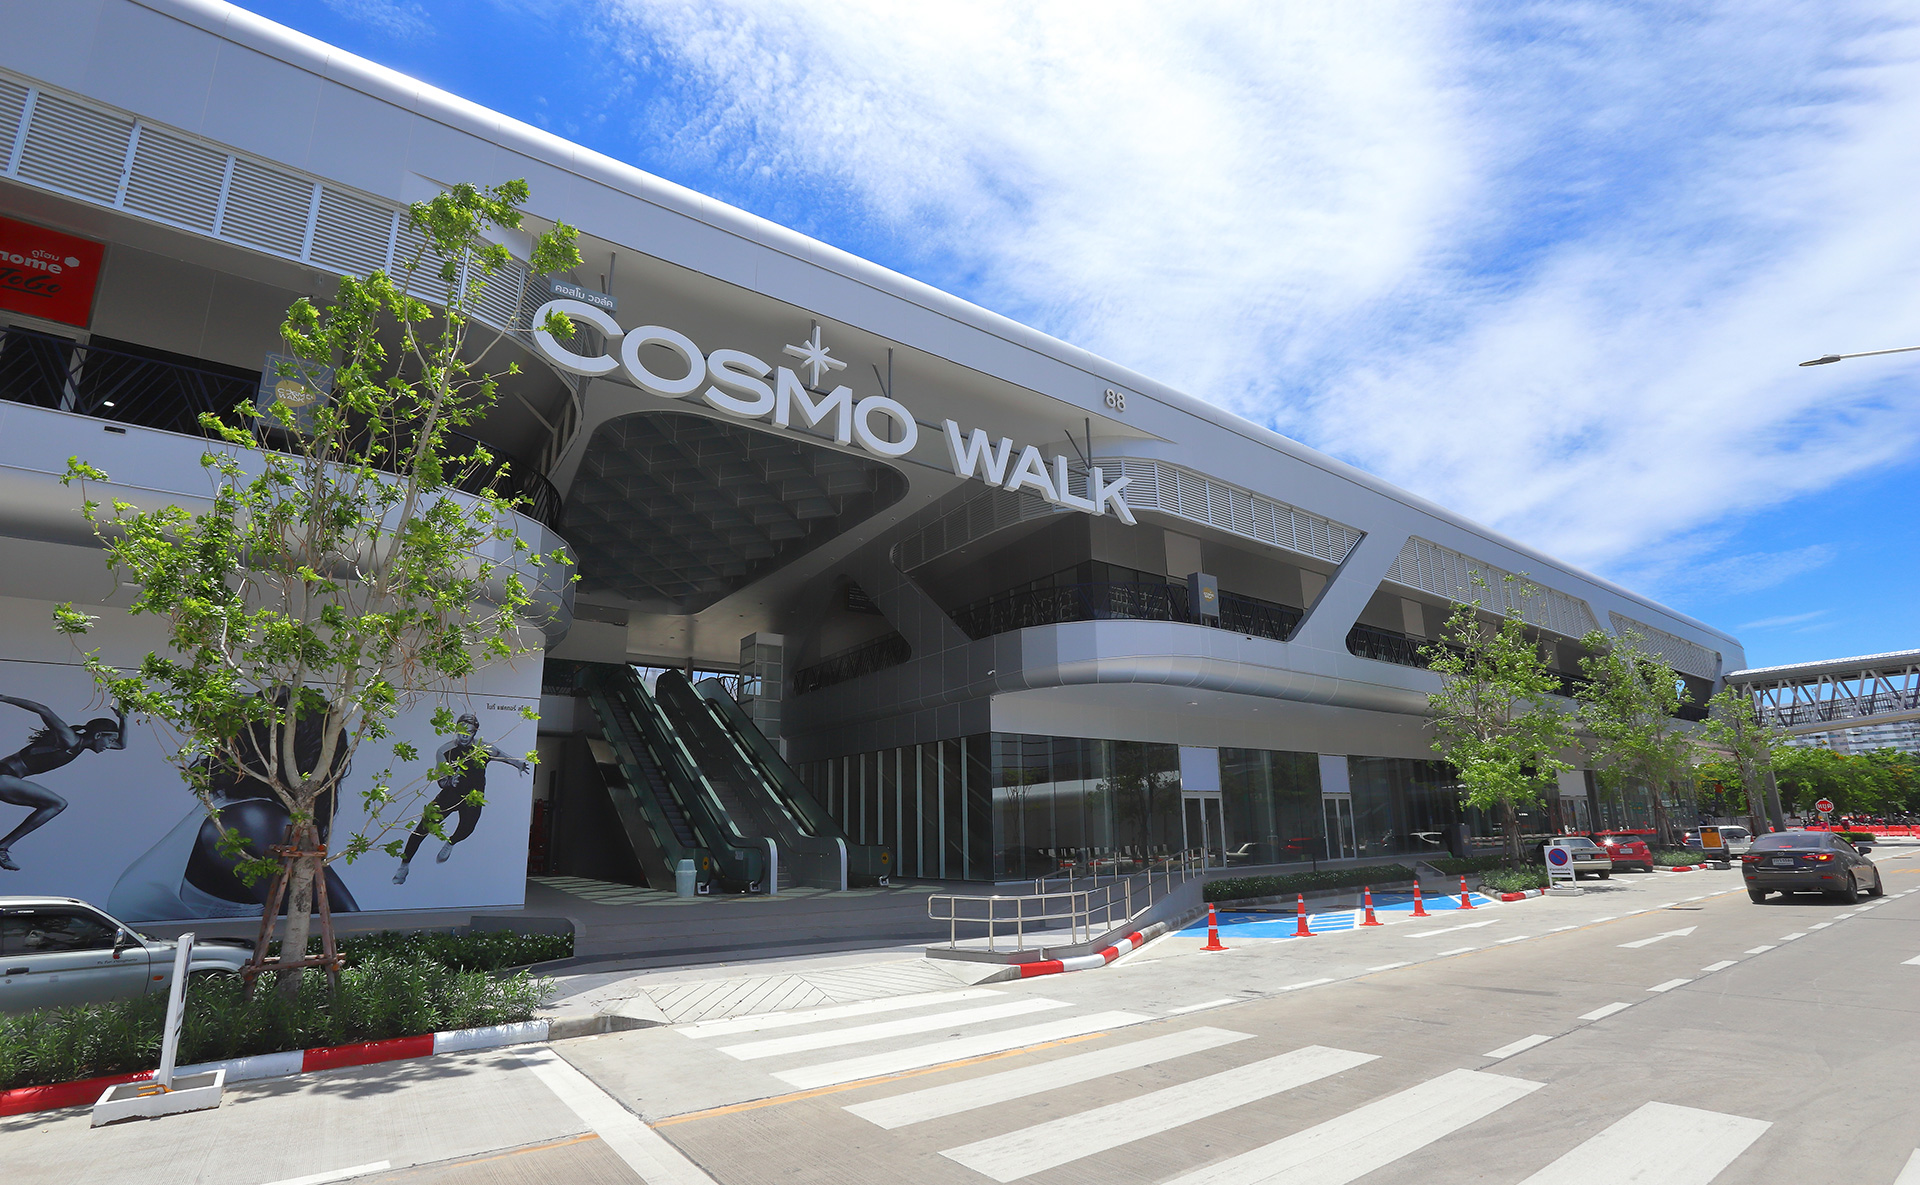 Cosmo Walk